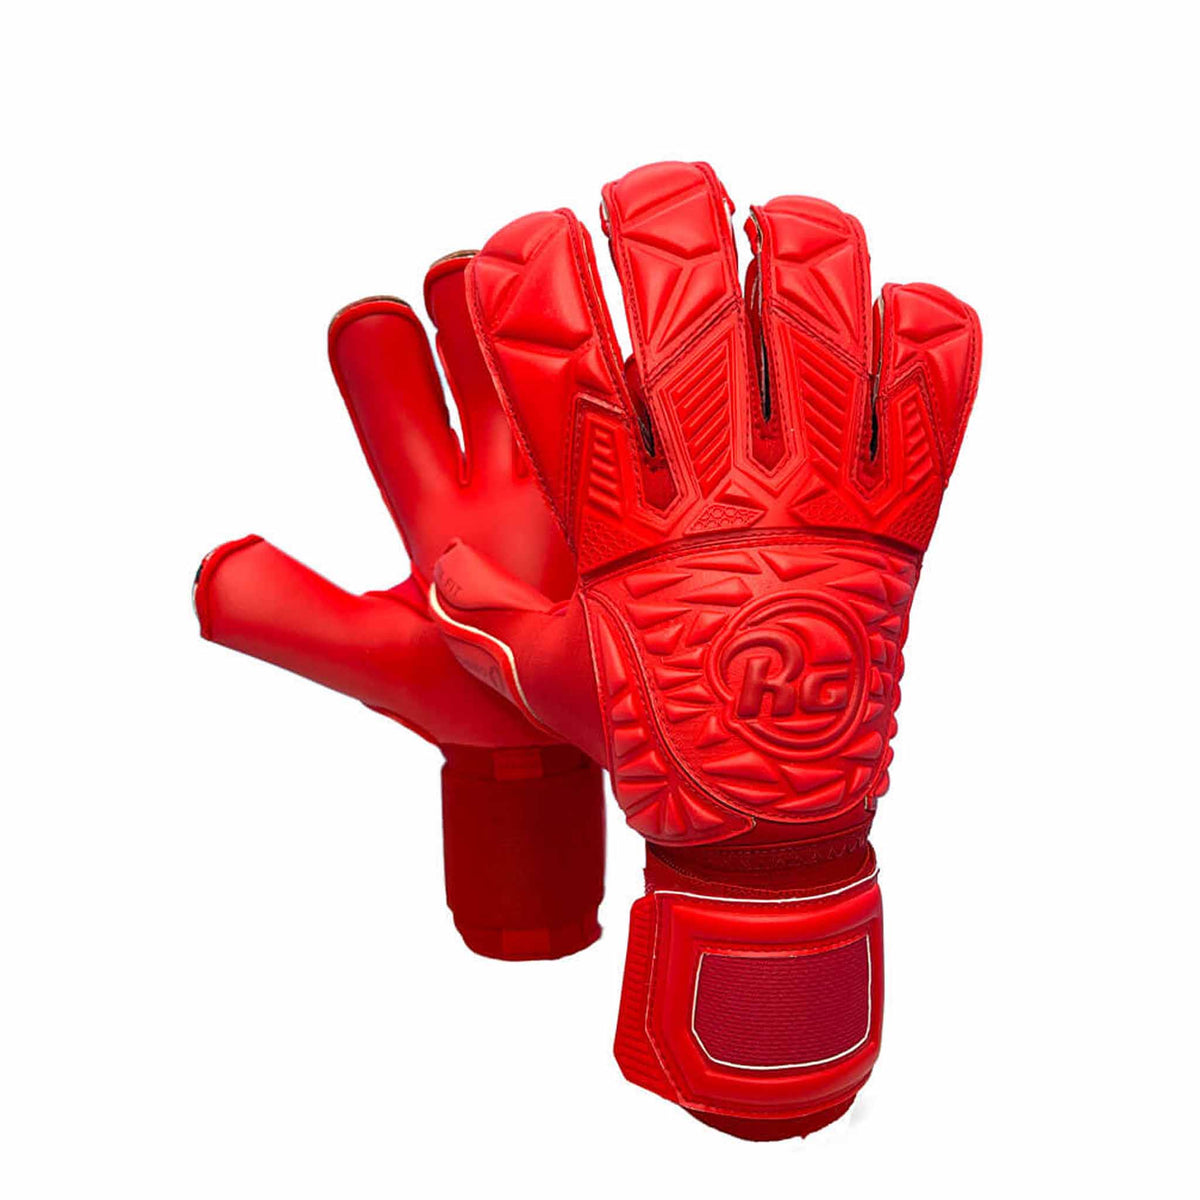 RG Goalkeeper Gloves Snaga Rosso gants de gardien de but de soccer - Rouge paire